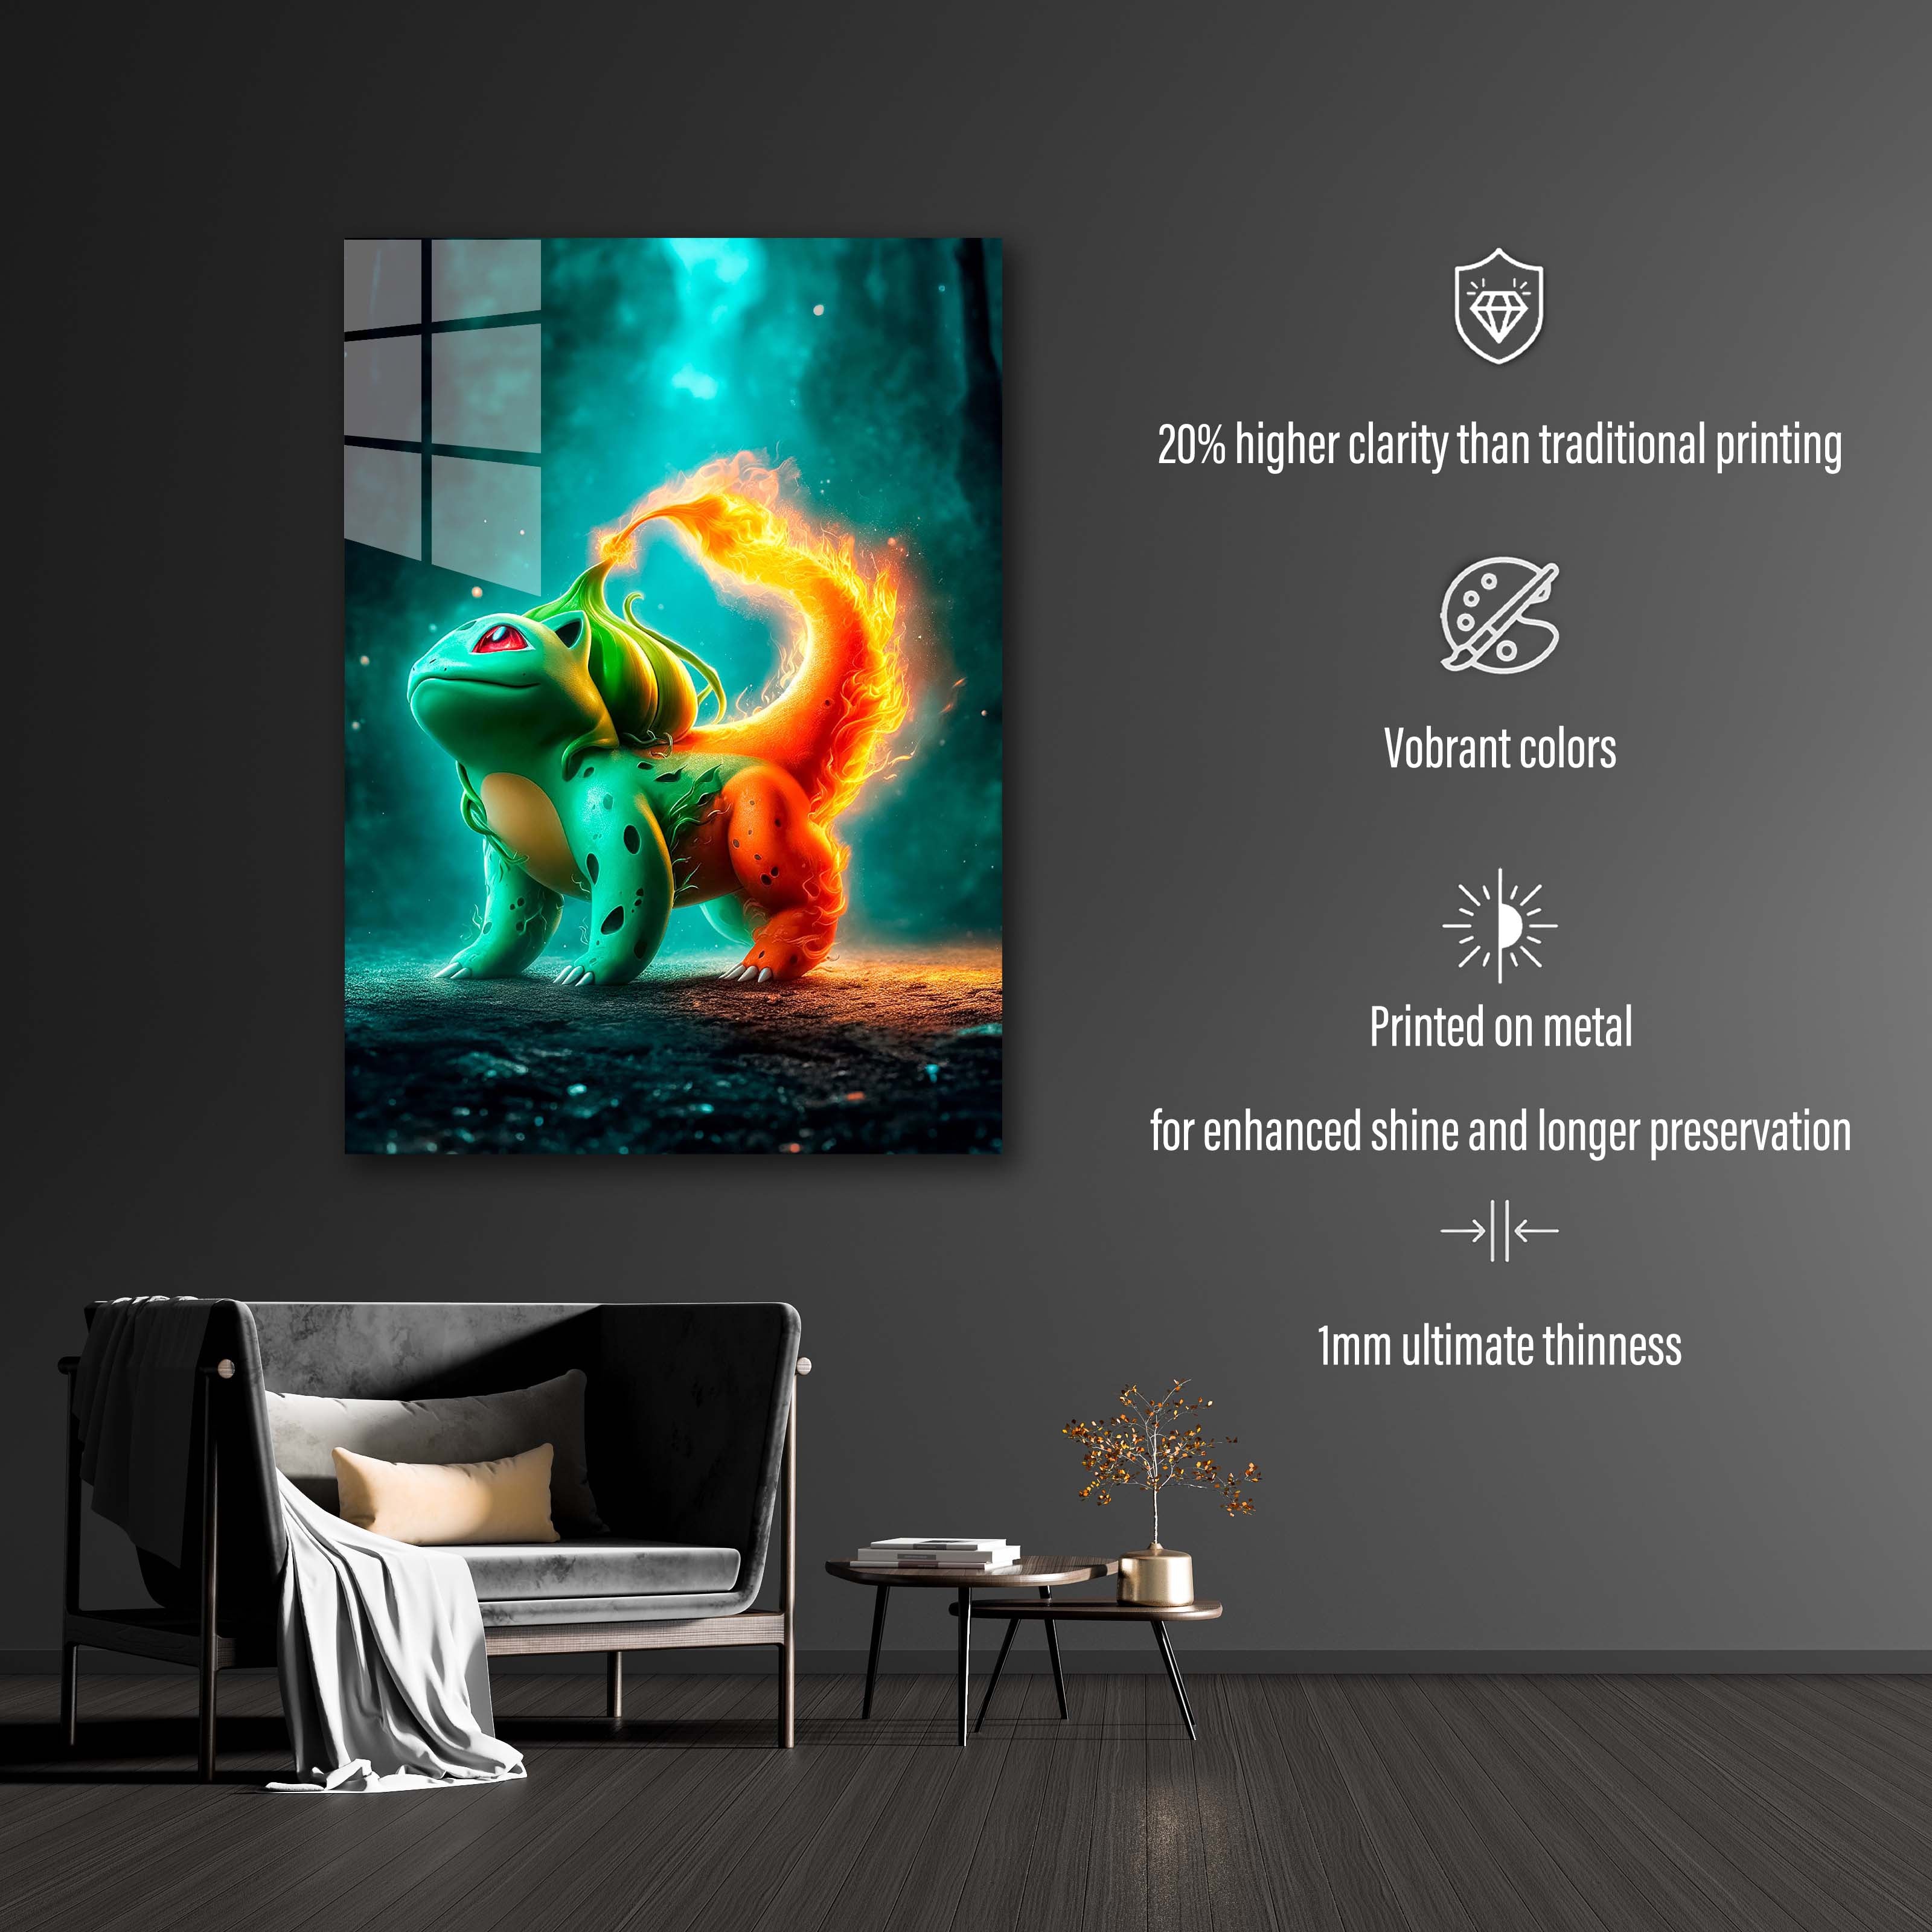 Bulbasaur x Charmander Fusion-Artwork by @Creativity_Artopia